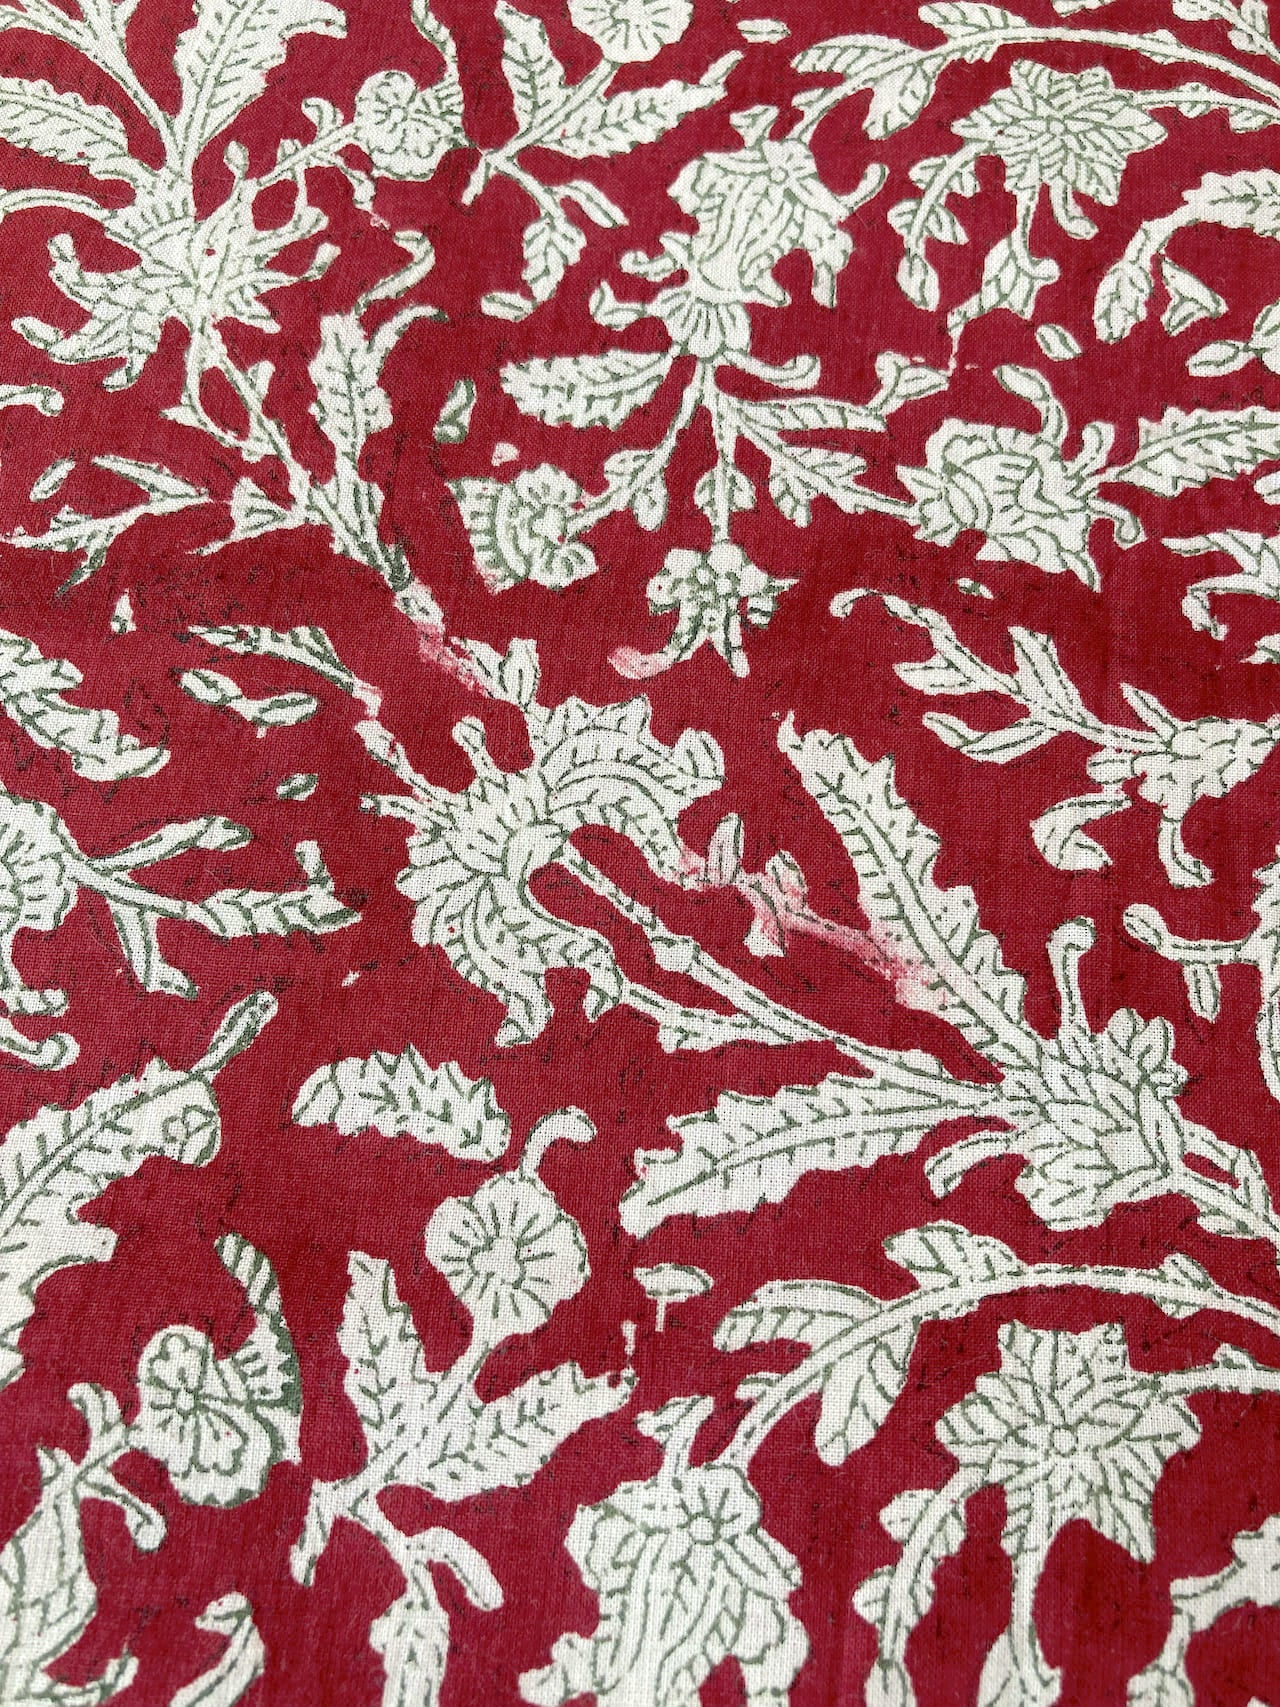 India Hand Block Print Red Cotton Fabric #151-5